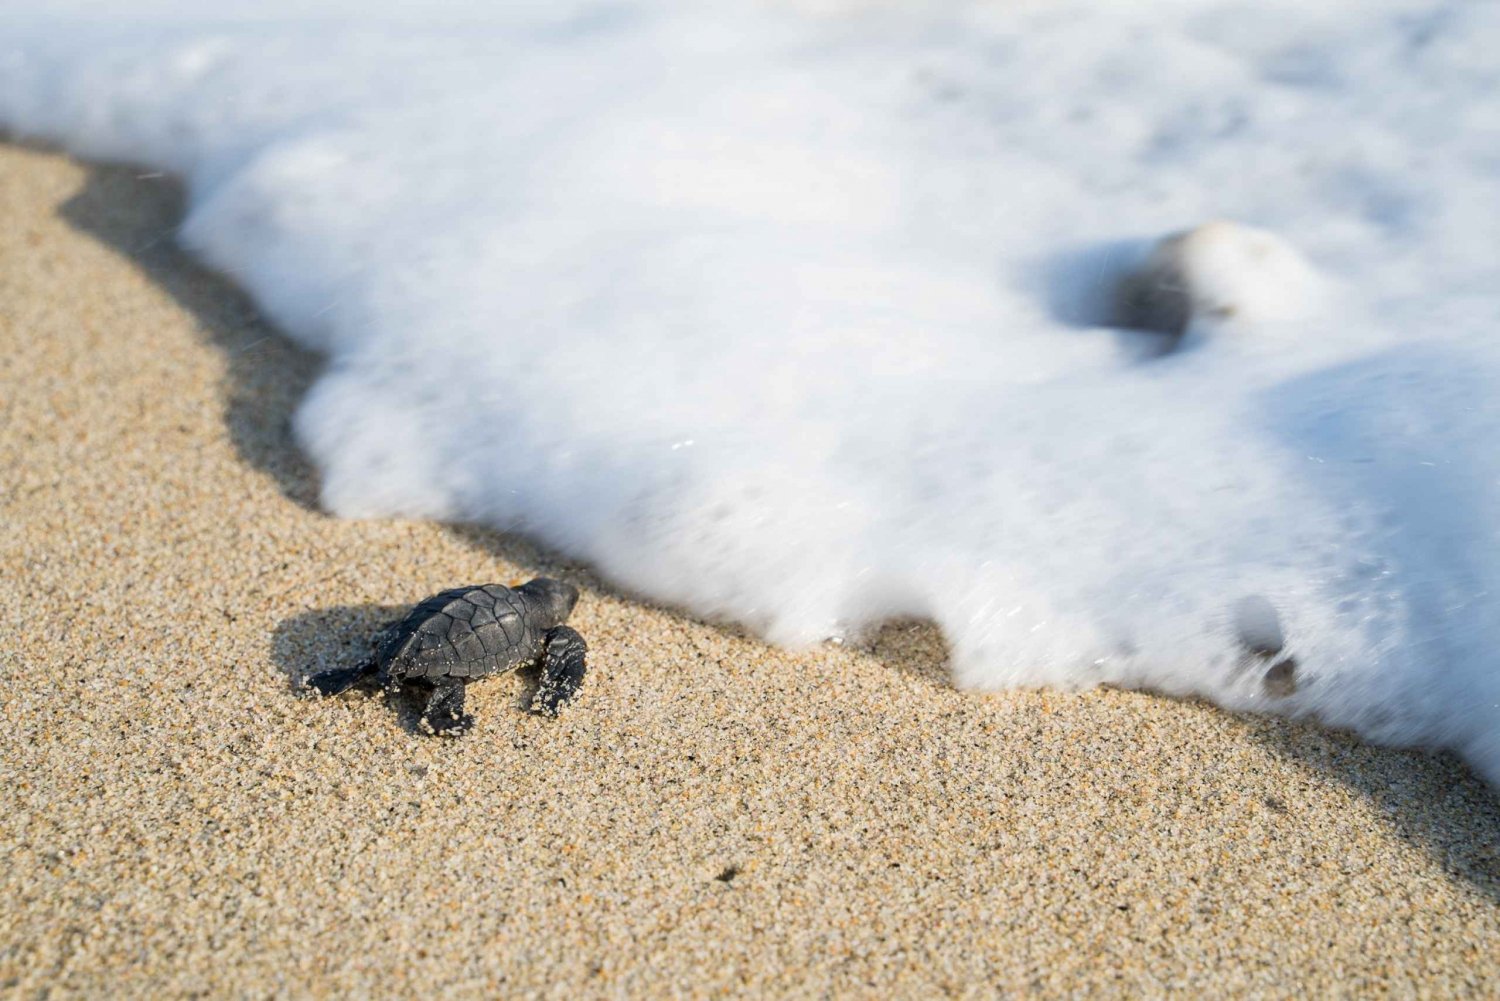 Puerto Escondido: Experiencia de liberación de tortugas